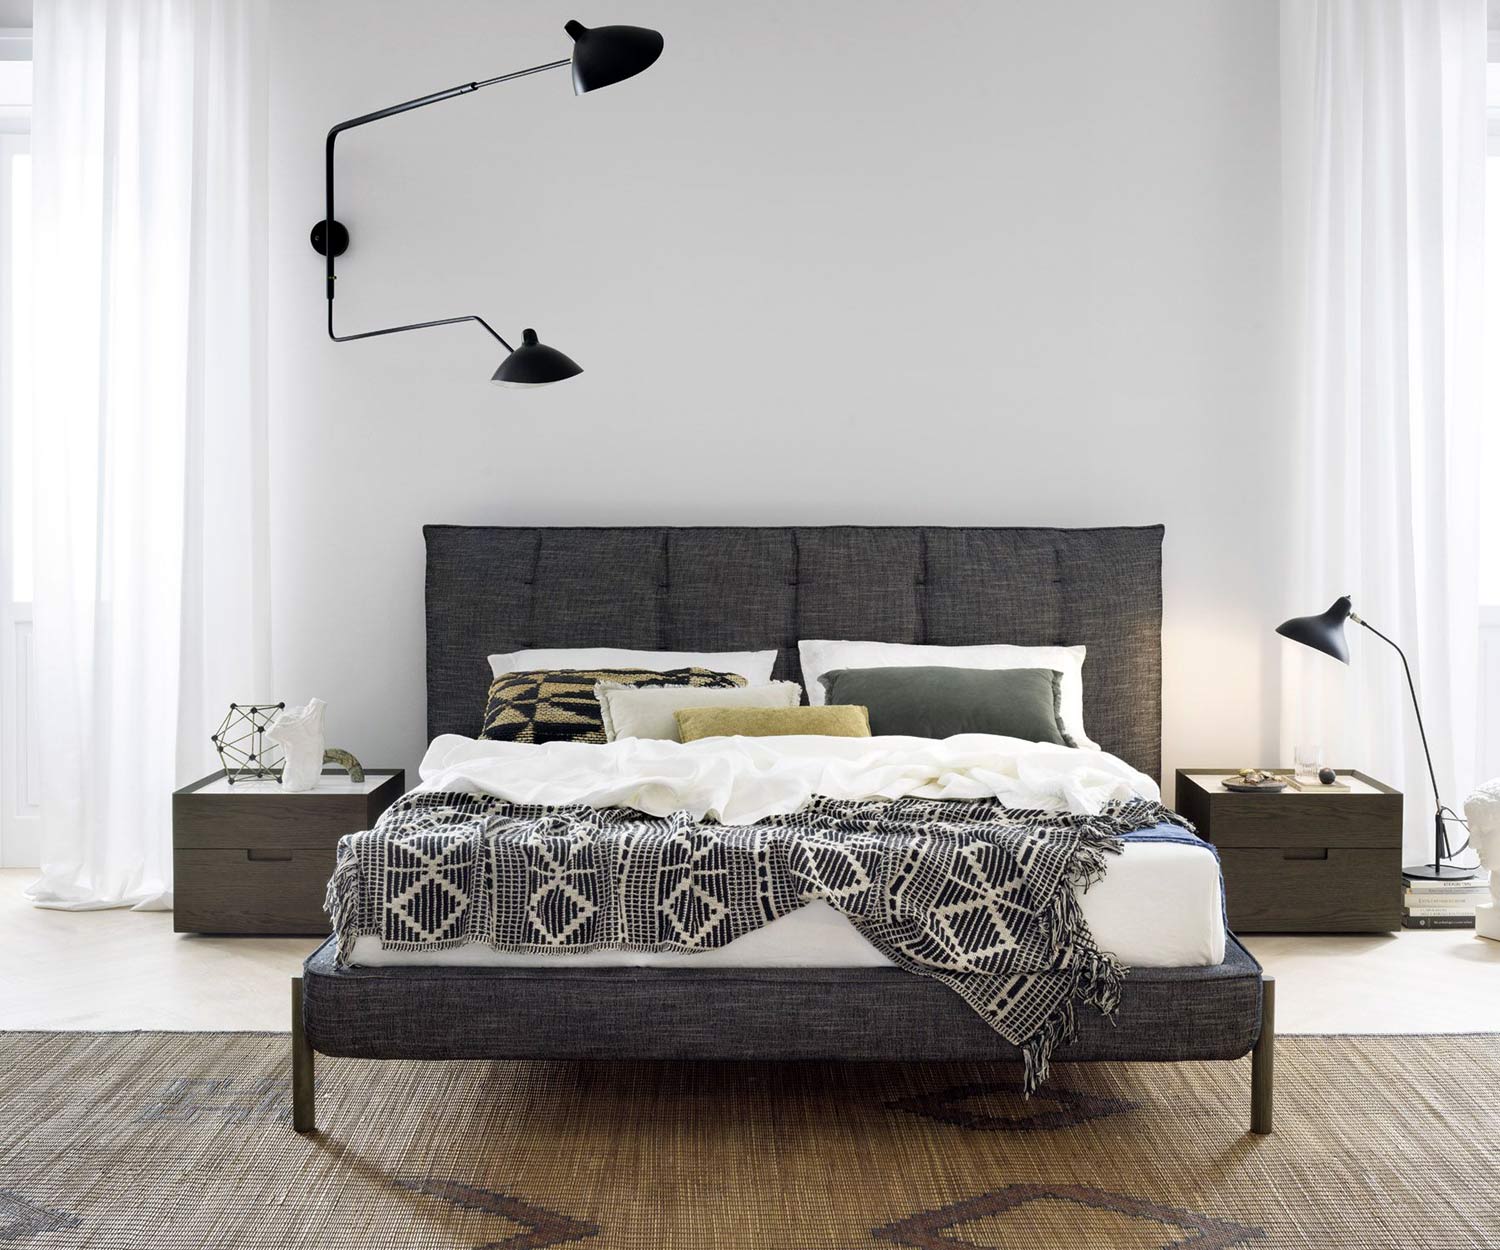 Exklusives Novamobili Design Bett Tufte im Schlafzimmer